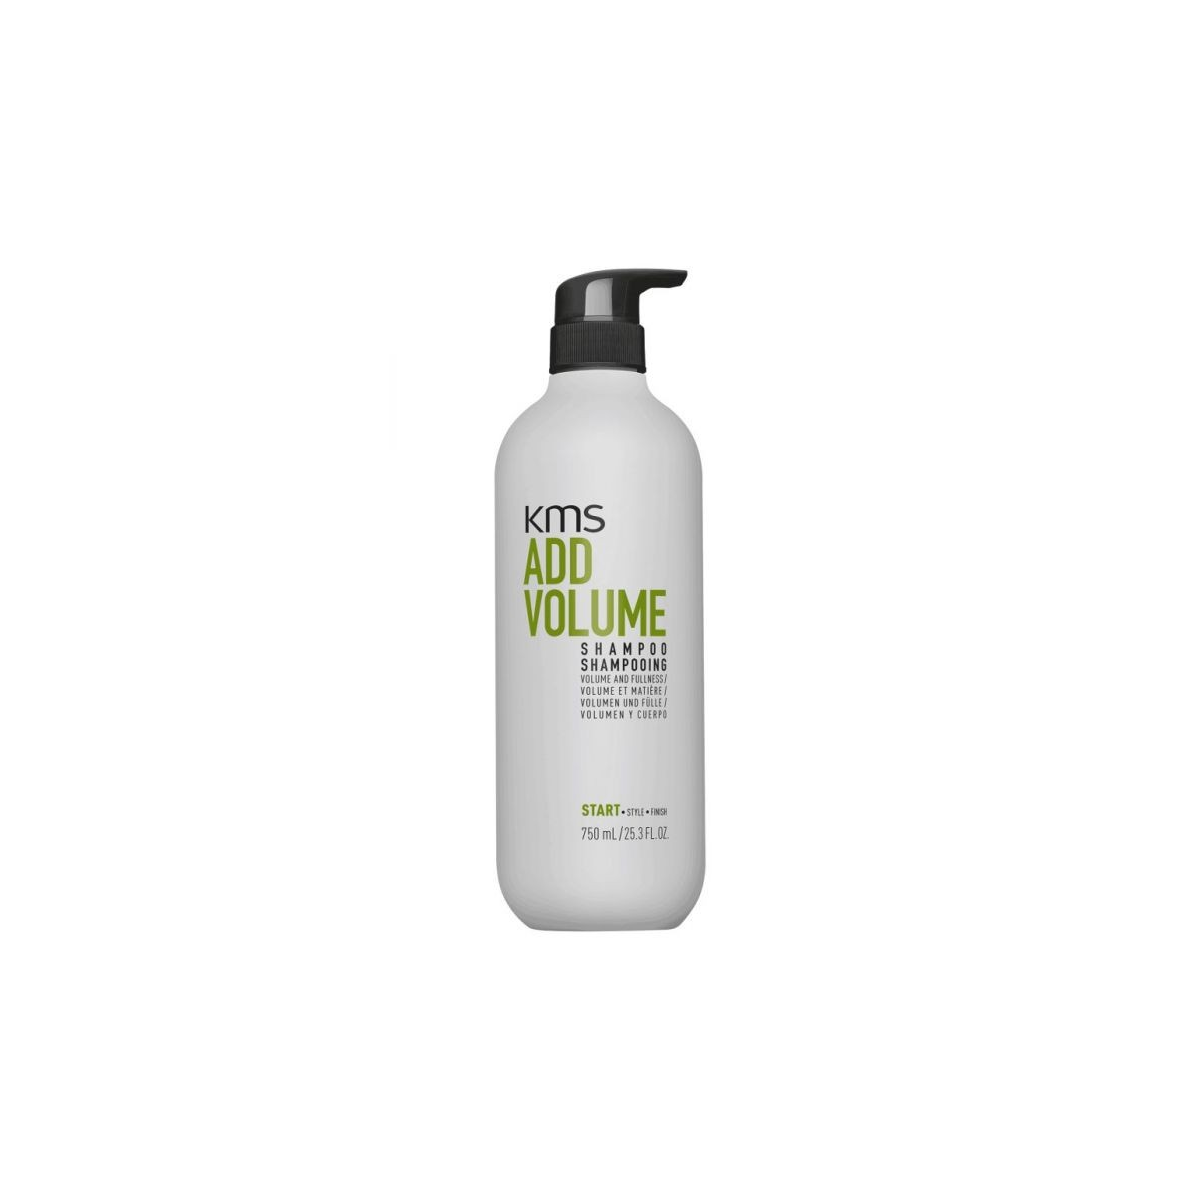 KMS CALIFORNIA - ADDVOLUME SHAMPOO (750ml) Shampoo volumizzante